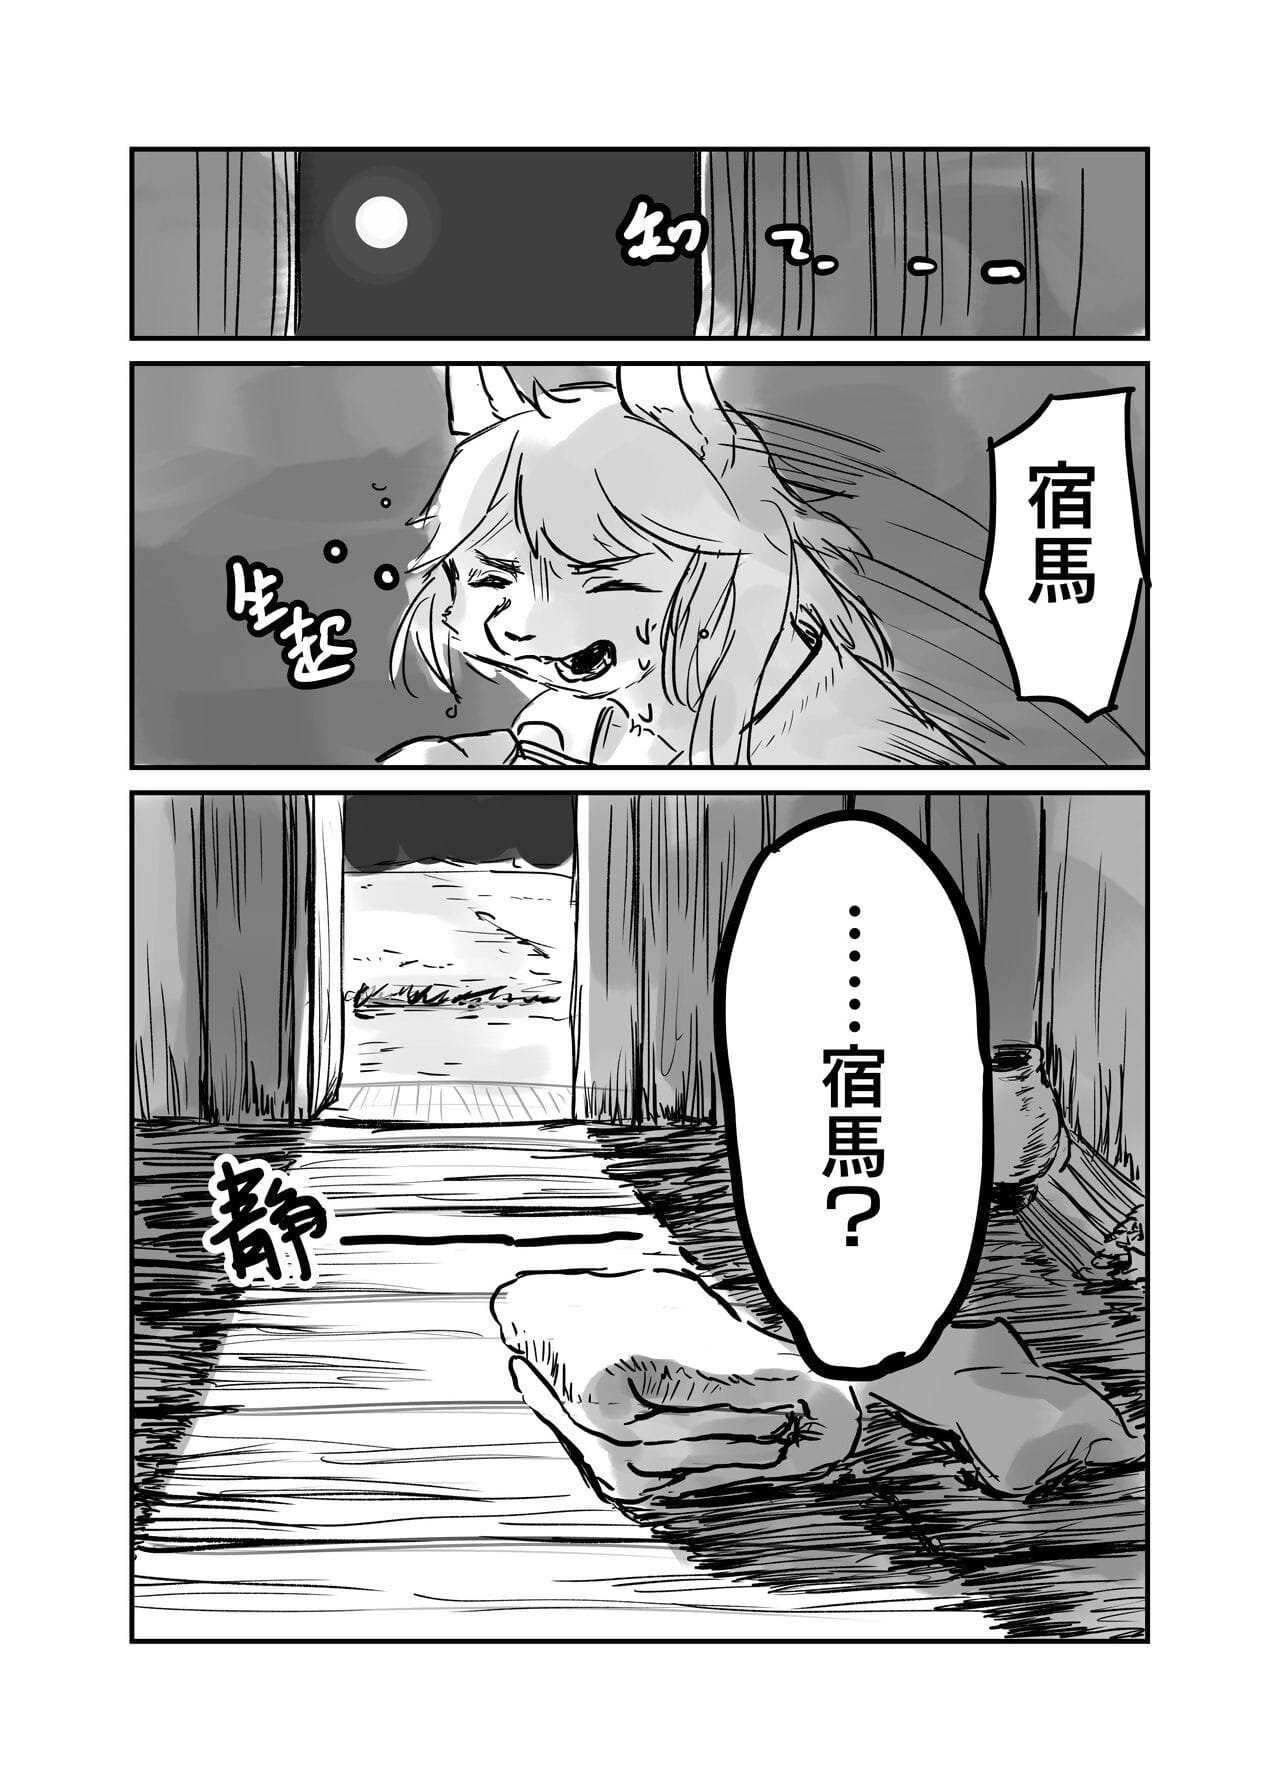 （the Посетитель 他乡之人 by：鬼流 часть 2 page 1